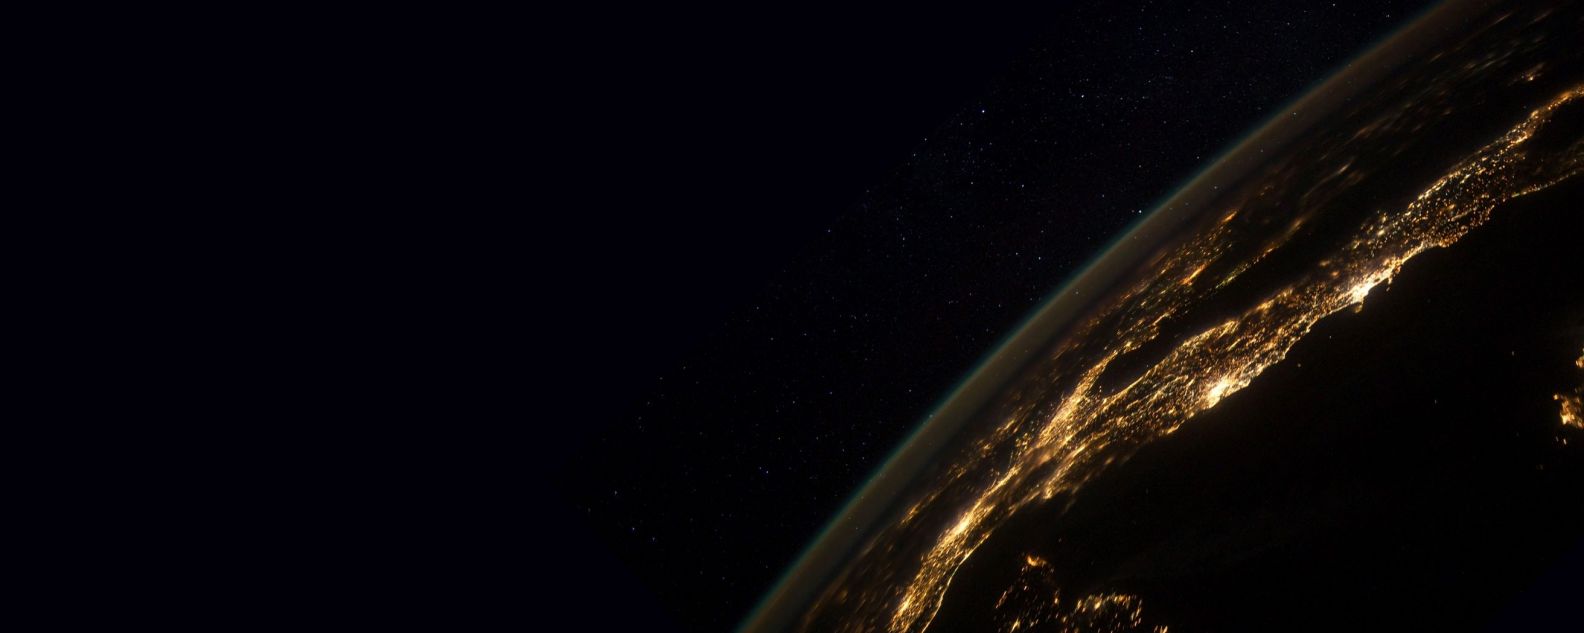 Pemandangan Bumi dari luar angkasa dengan lampu kota di malam hari.